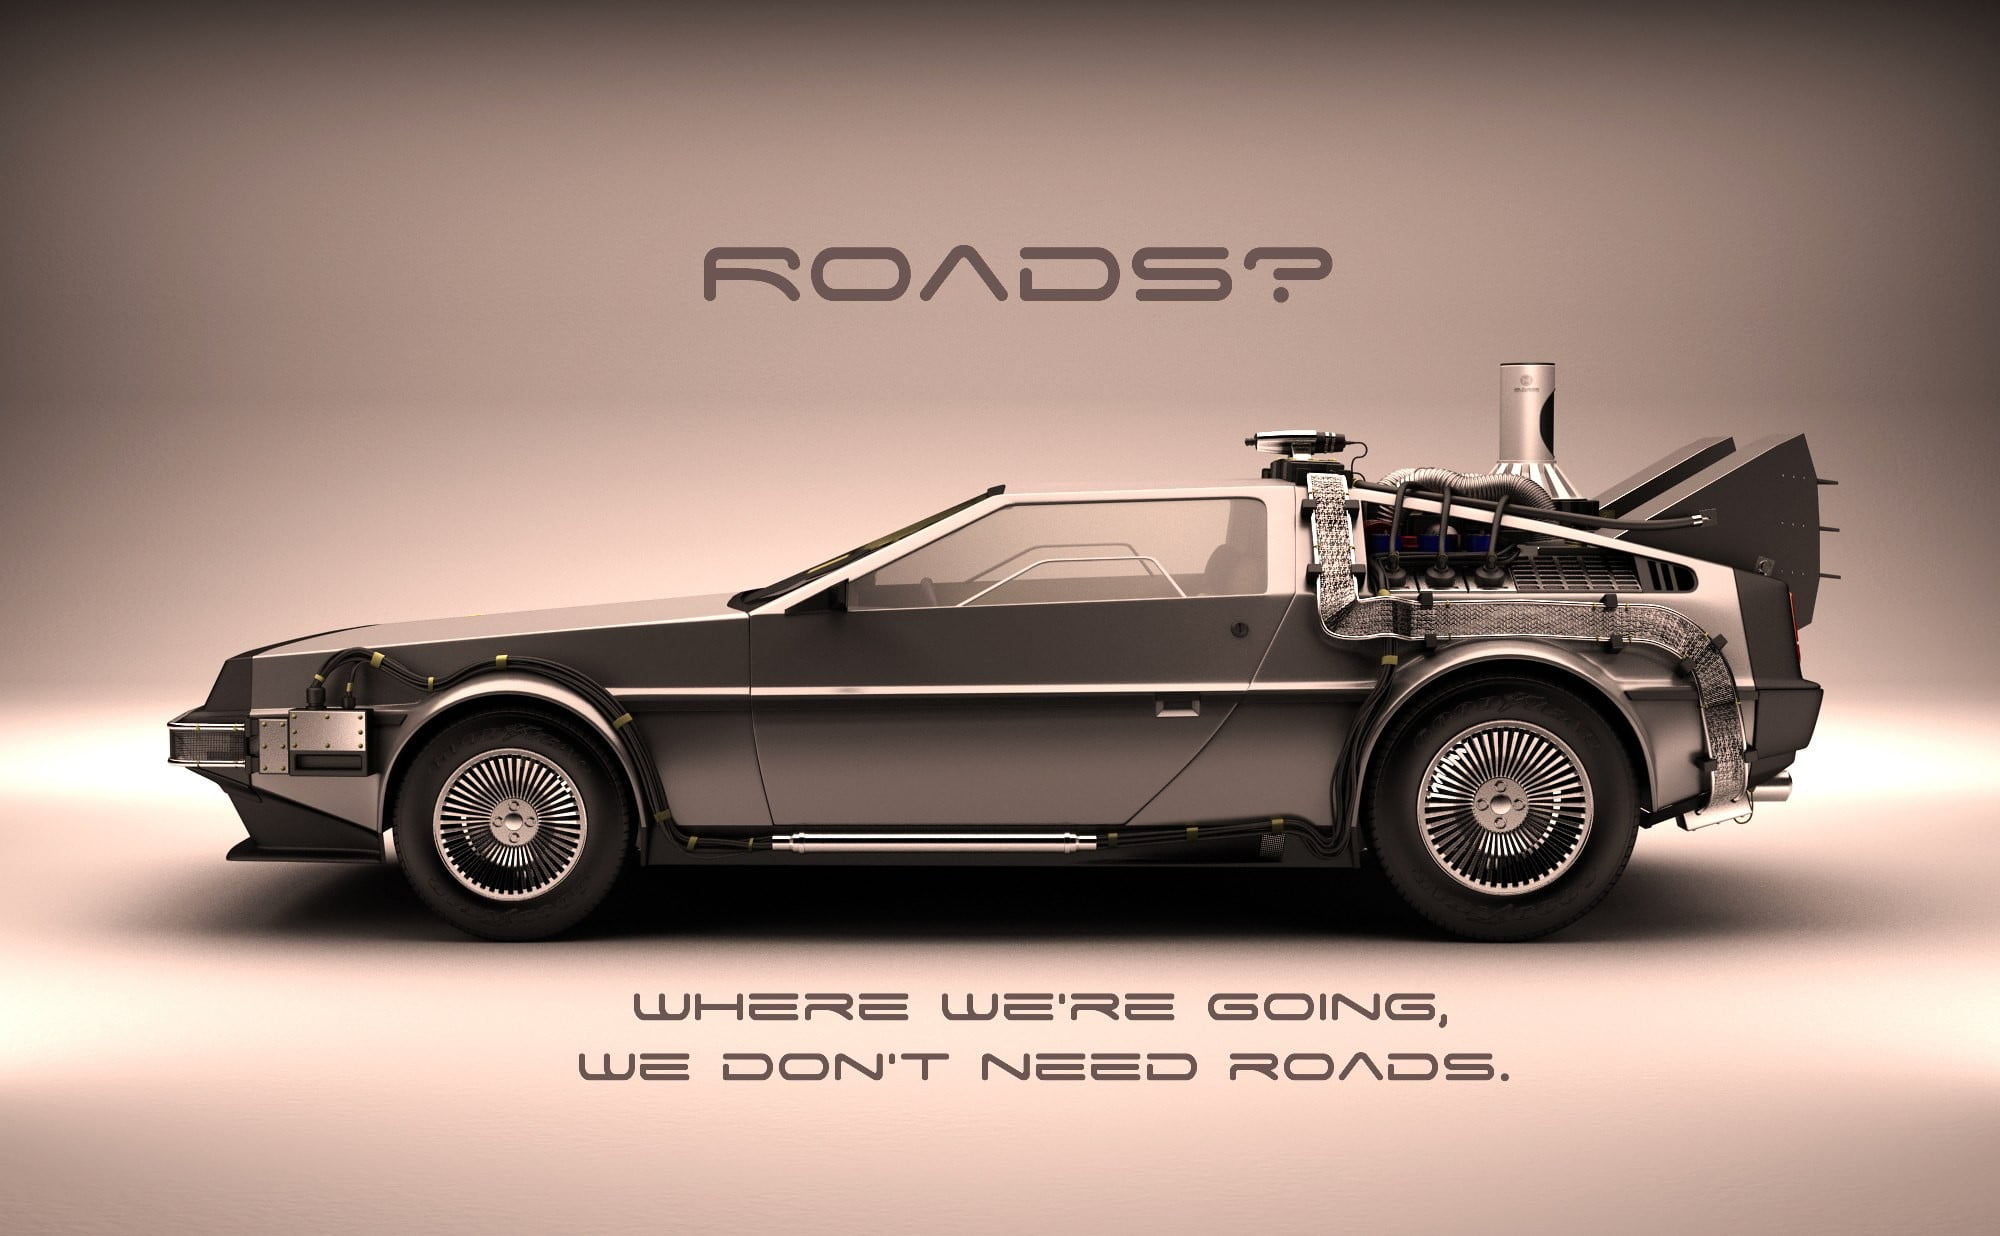 gray car, Back to the Future, DeLorean, movies, quote, vehicle